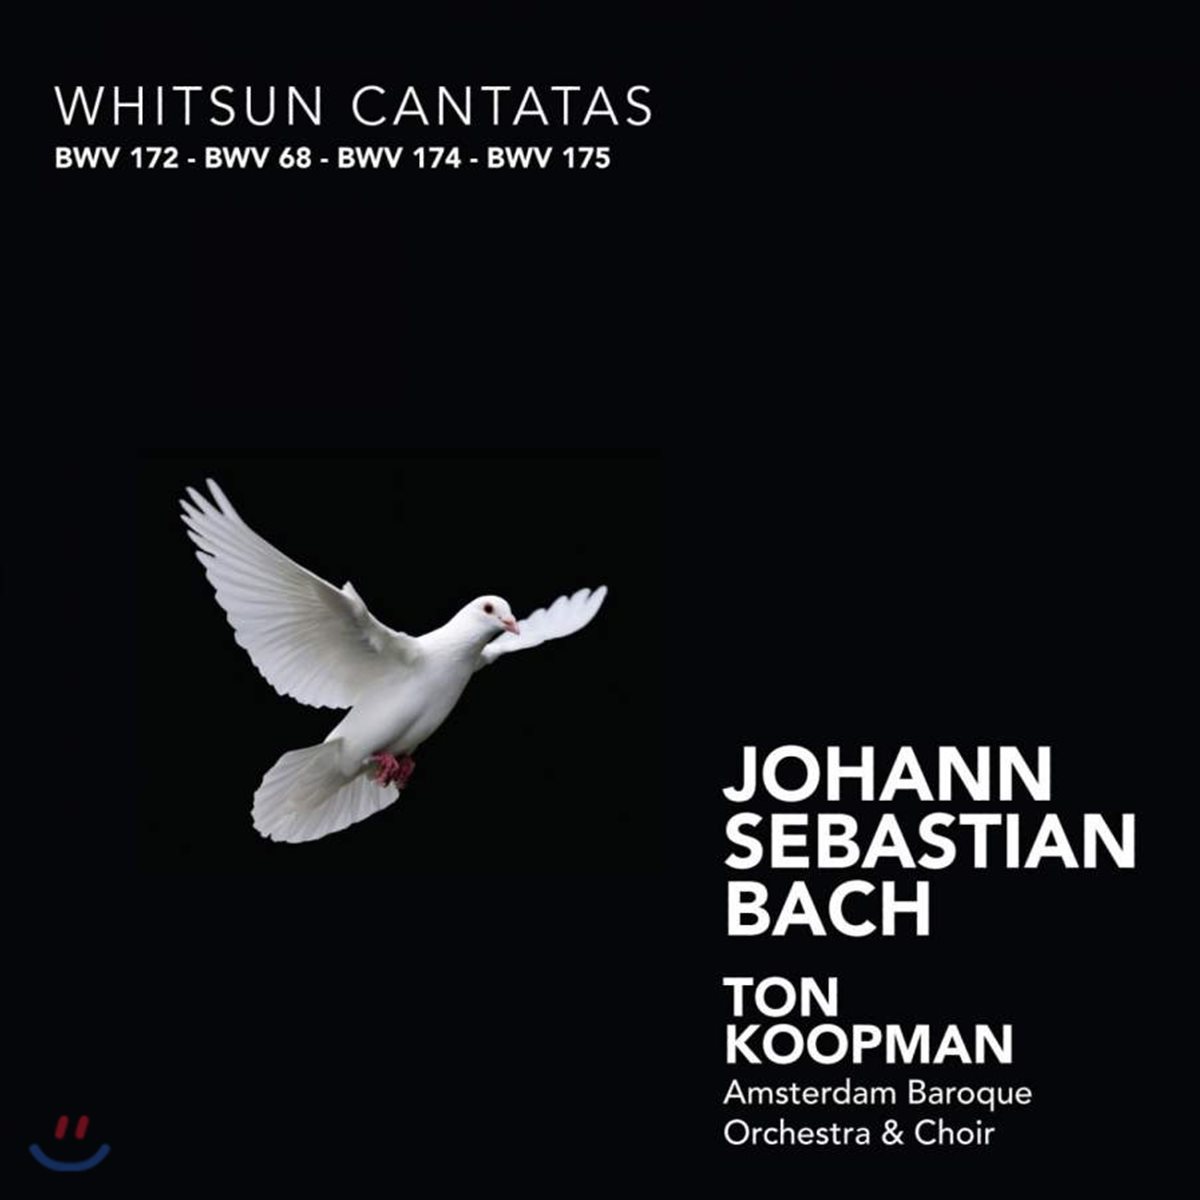 Ton Koopman 바흐: 성령강림절 칸타타 (Bach: Whitsun Cantatas BWV172, 68, 174, 175)